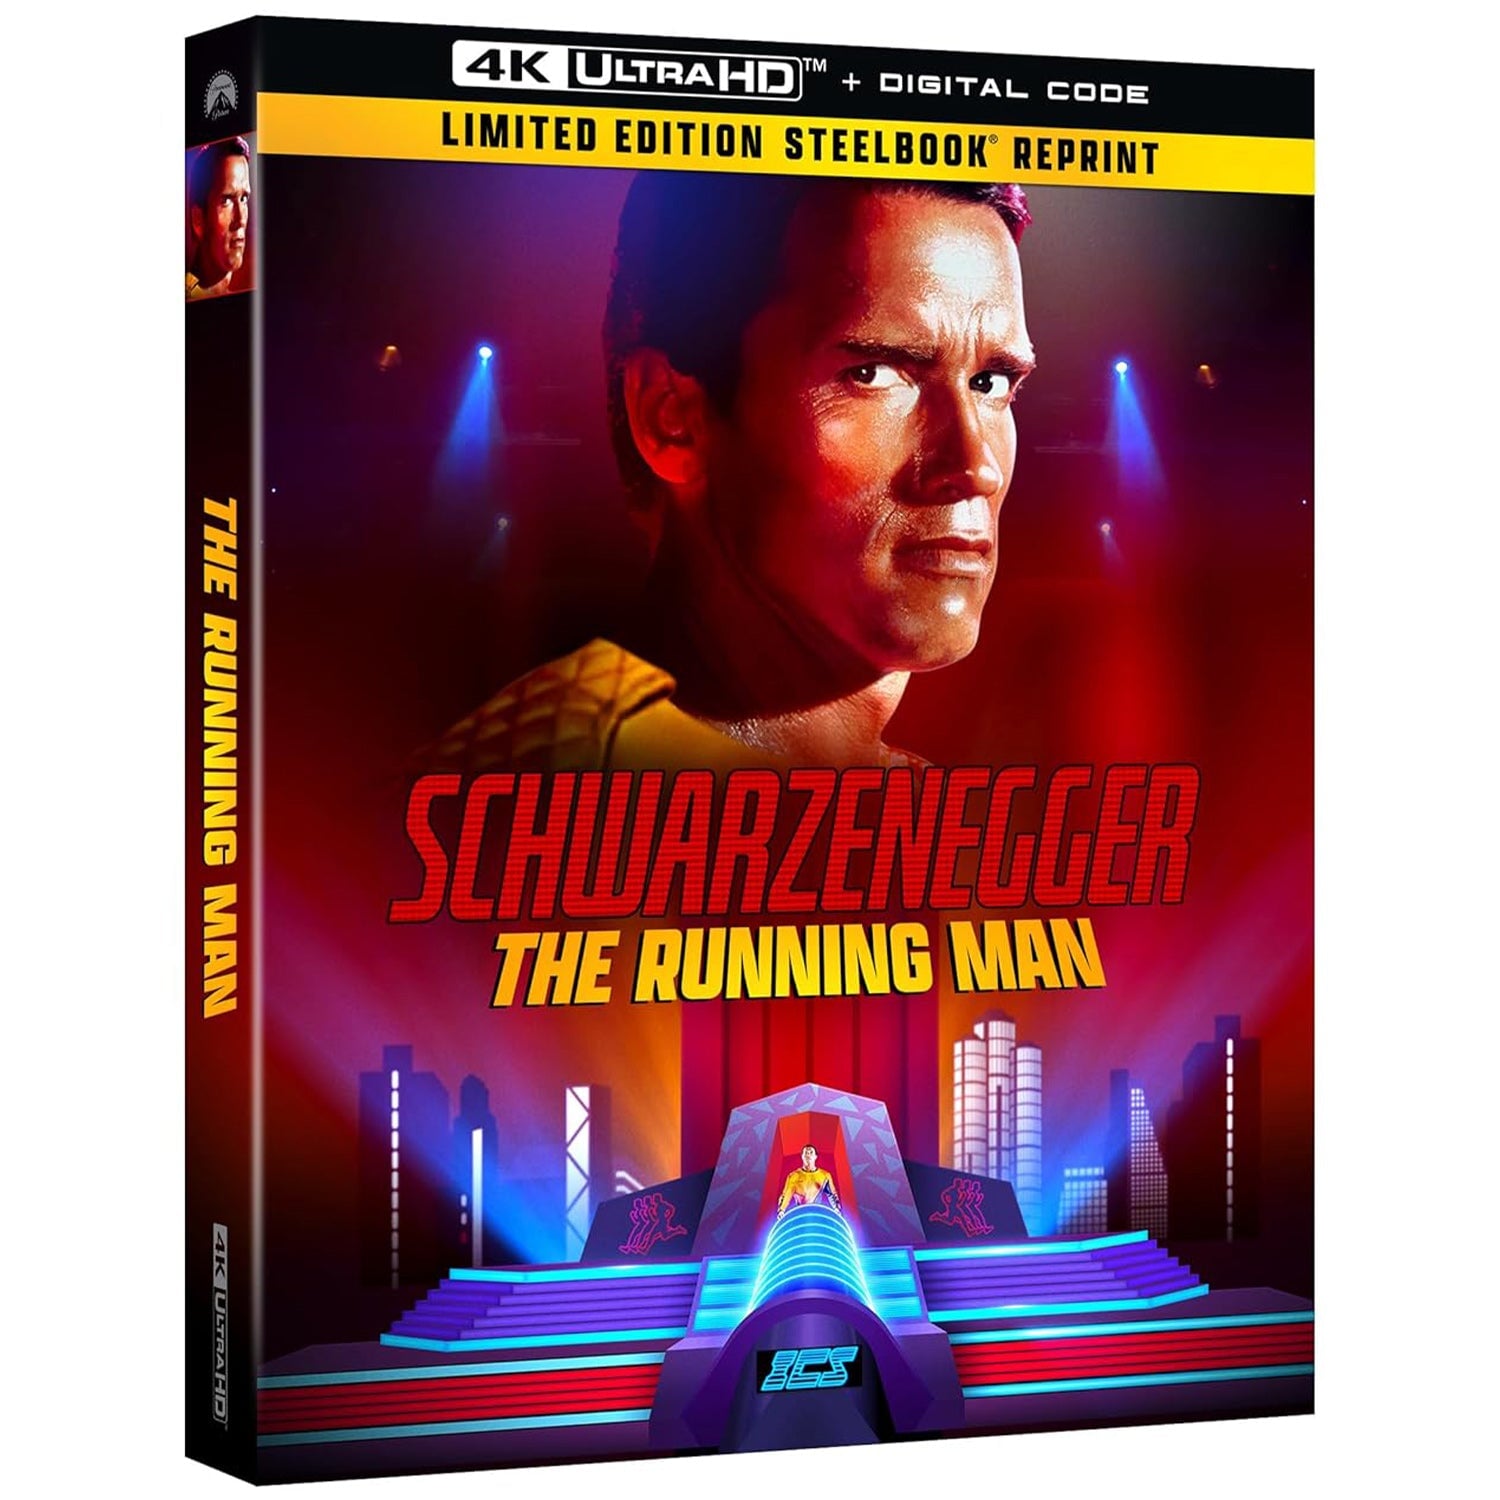 The Running Man (1987) (4K UHD Blu-ray) Steelbook